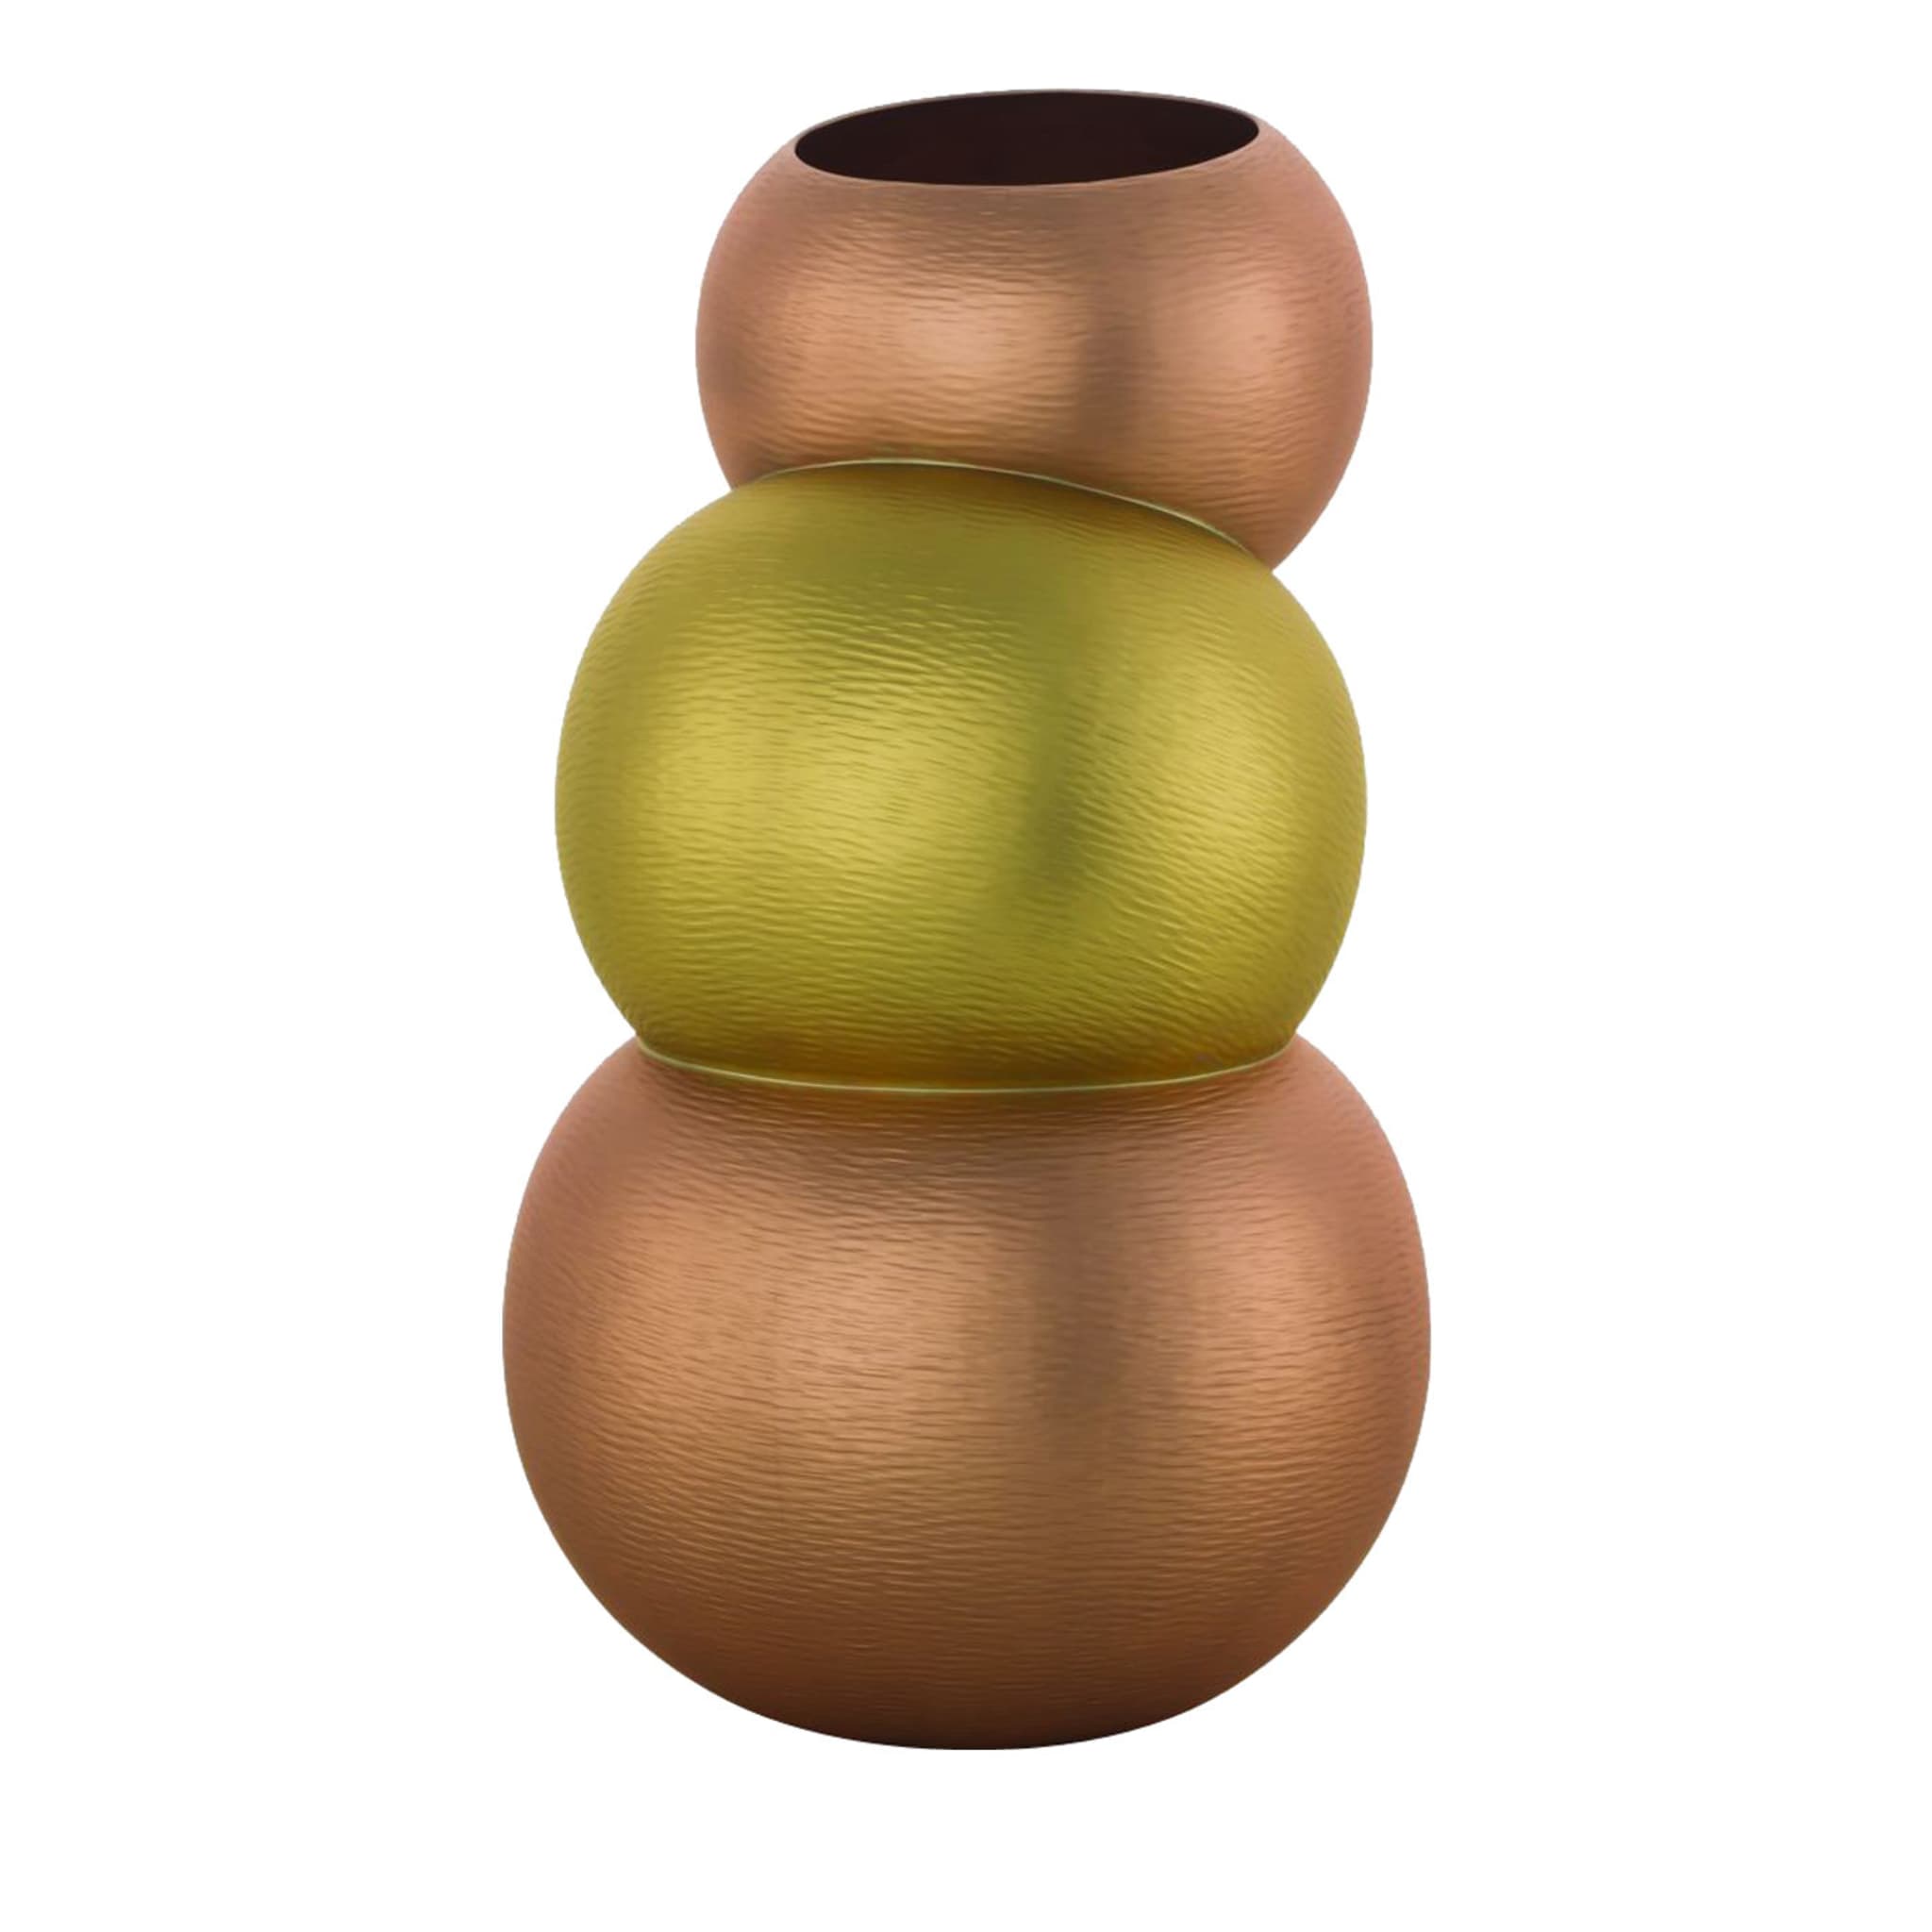 Equilibri Vase - Main view